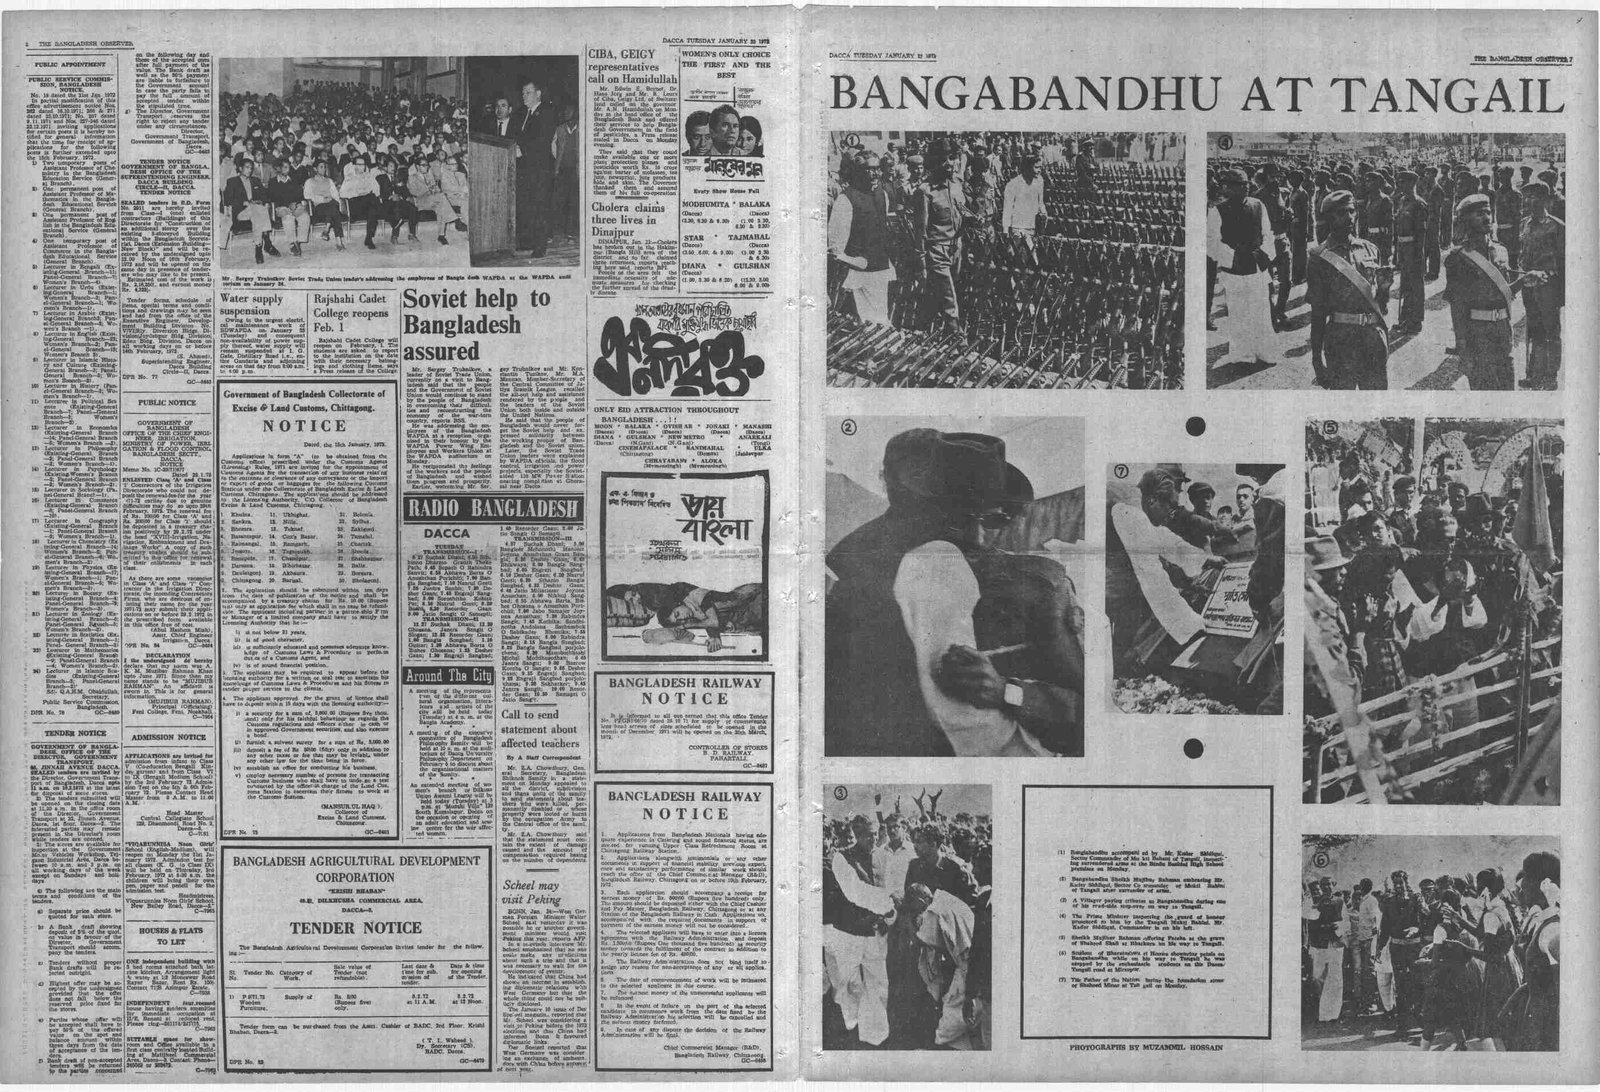 25JAN1972-Bangladesh Observer-Regular-Page 2 and 7